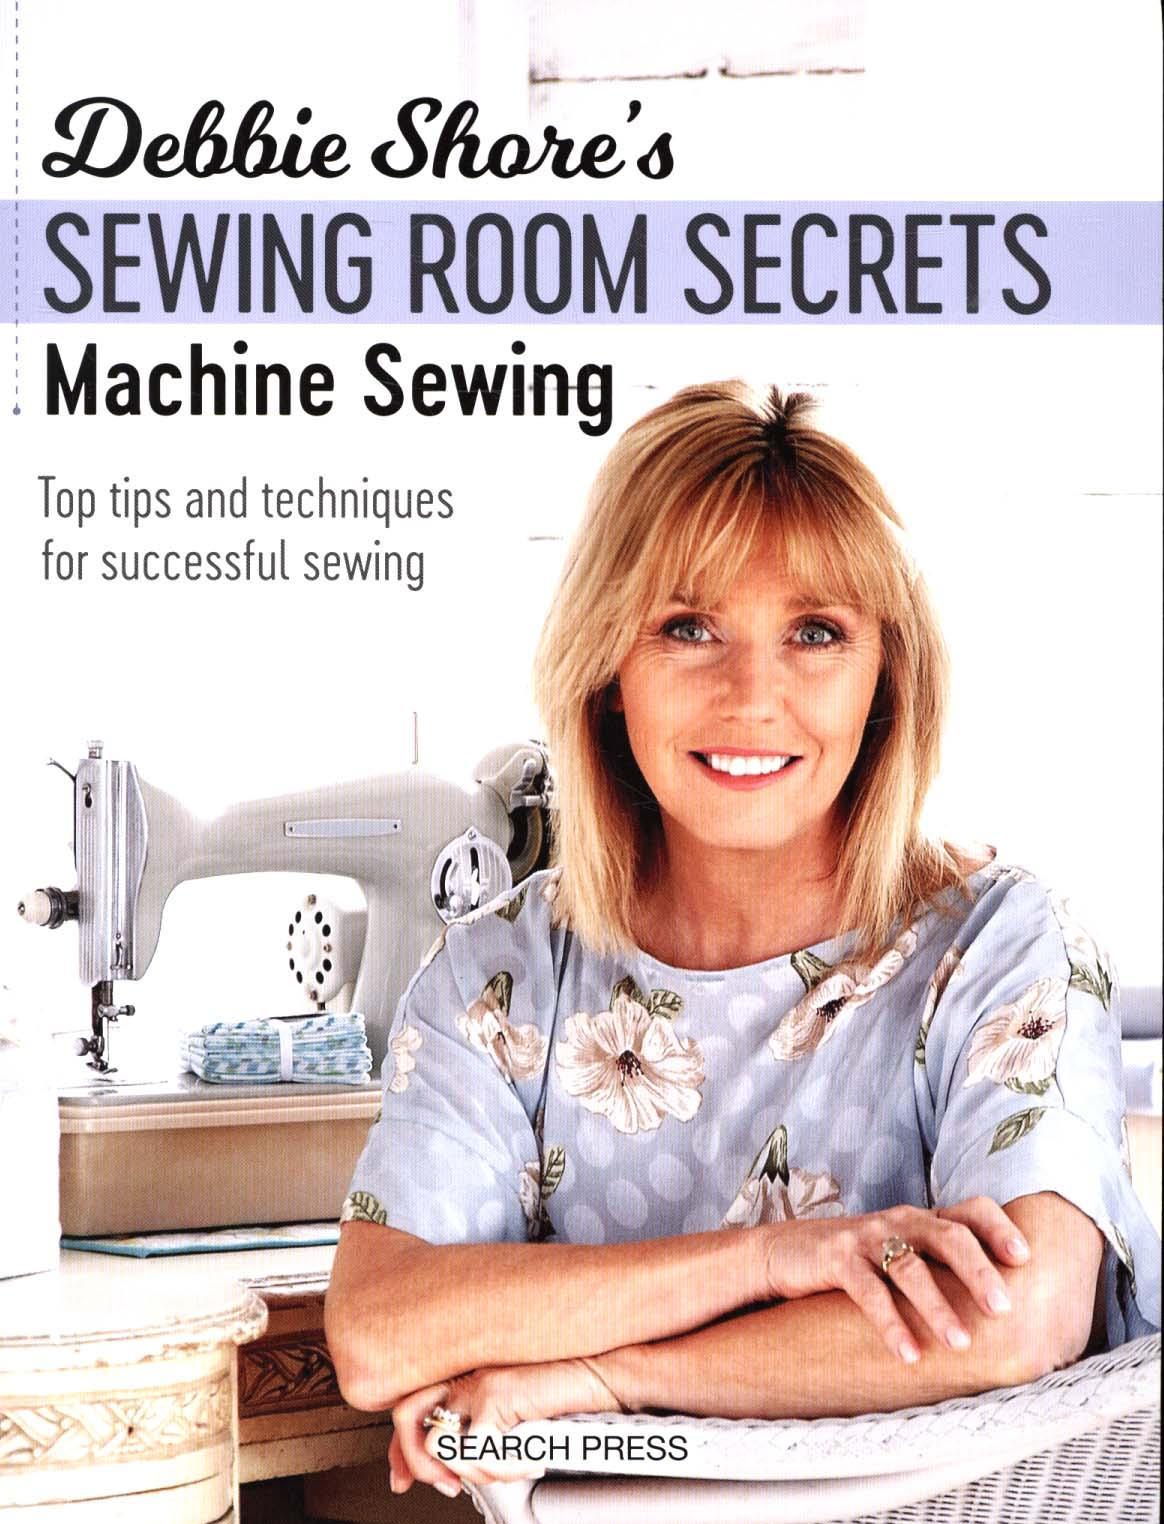 Debbie Shore's Sewing Room Secrets: Machine Sewing